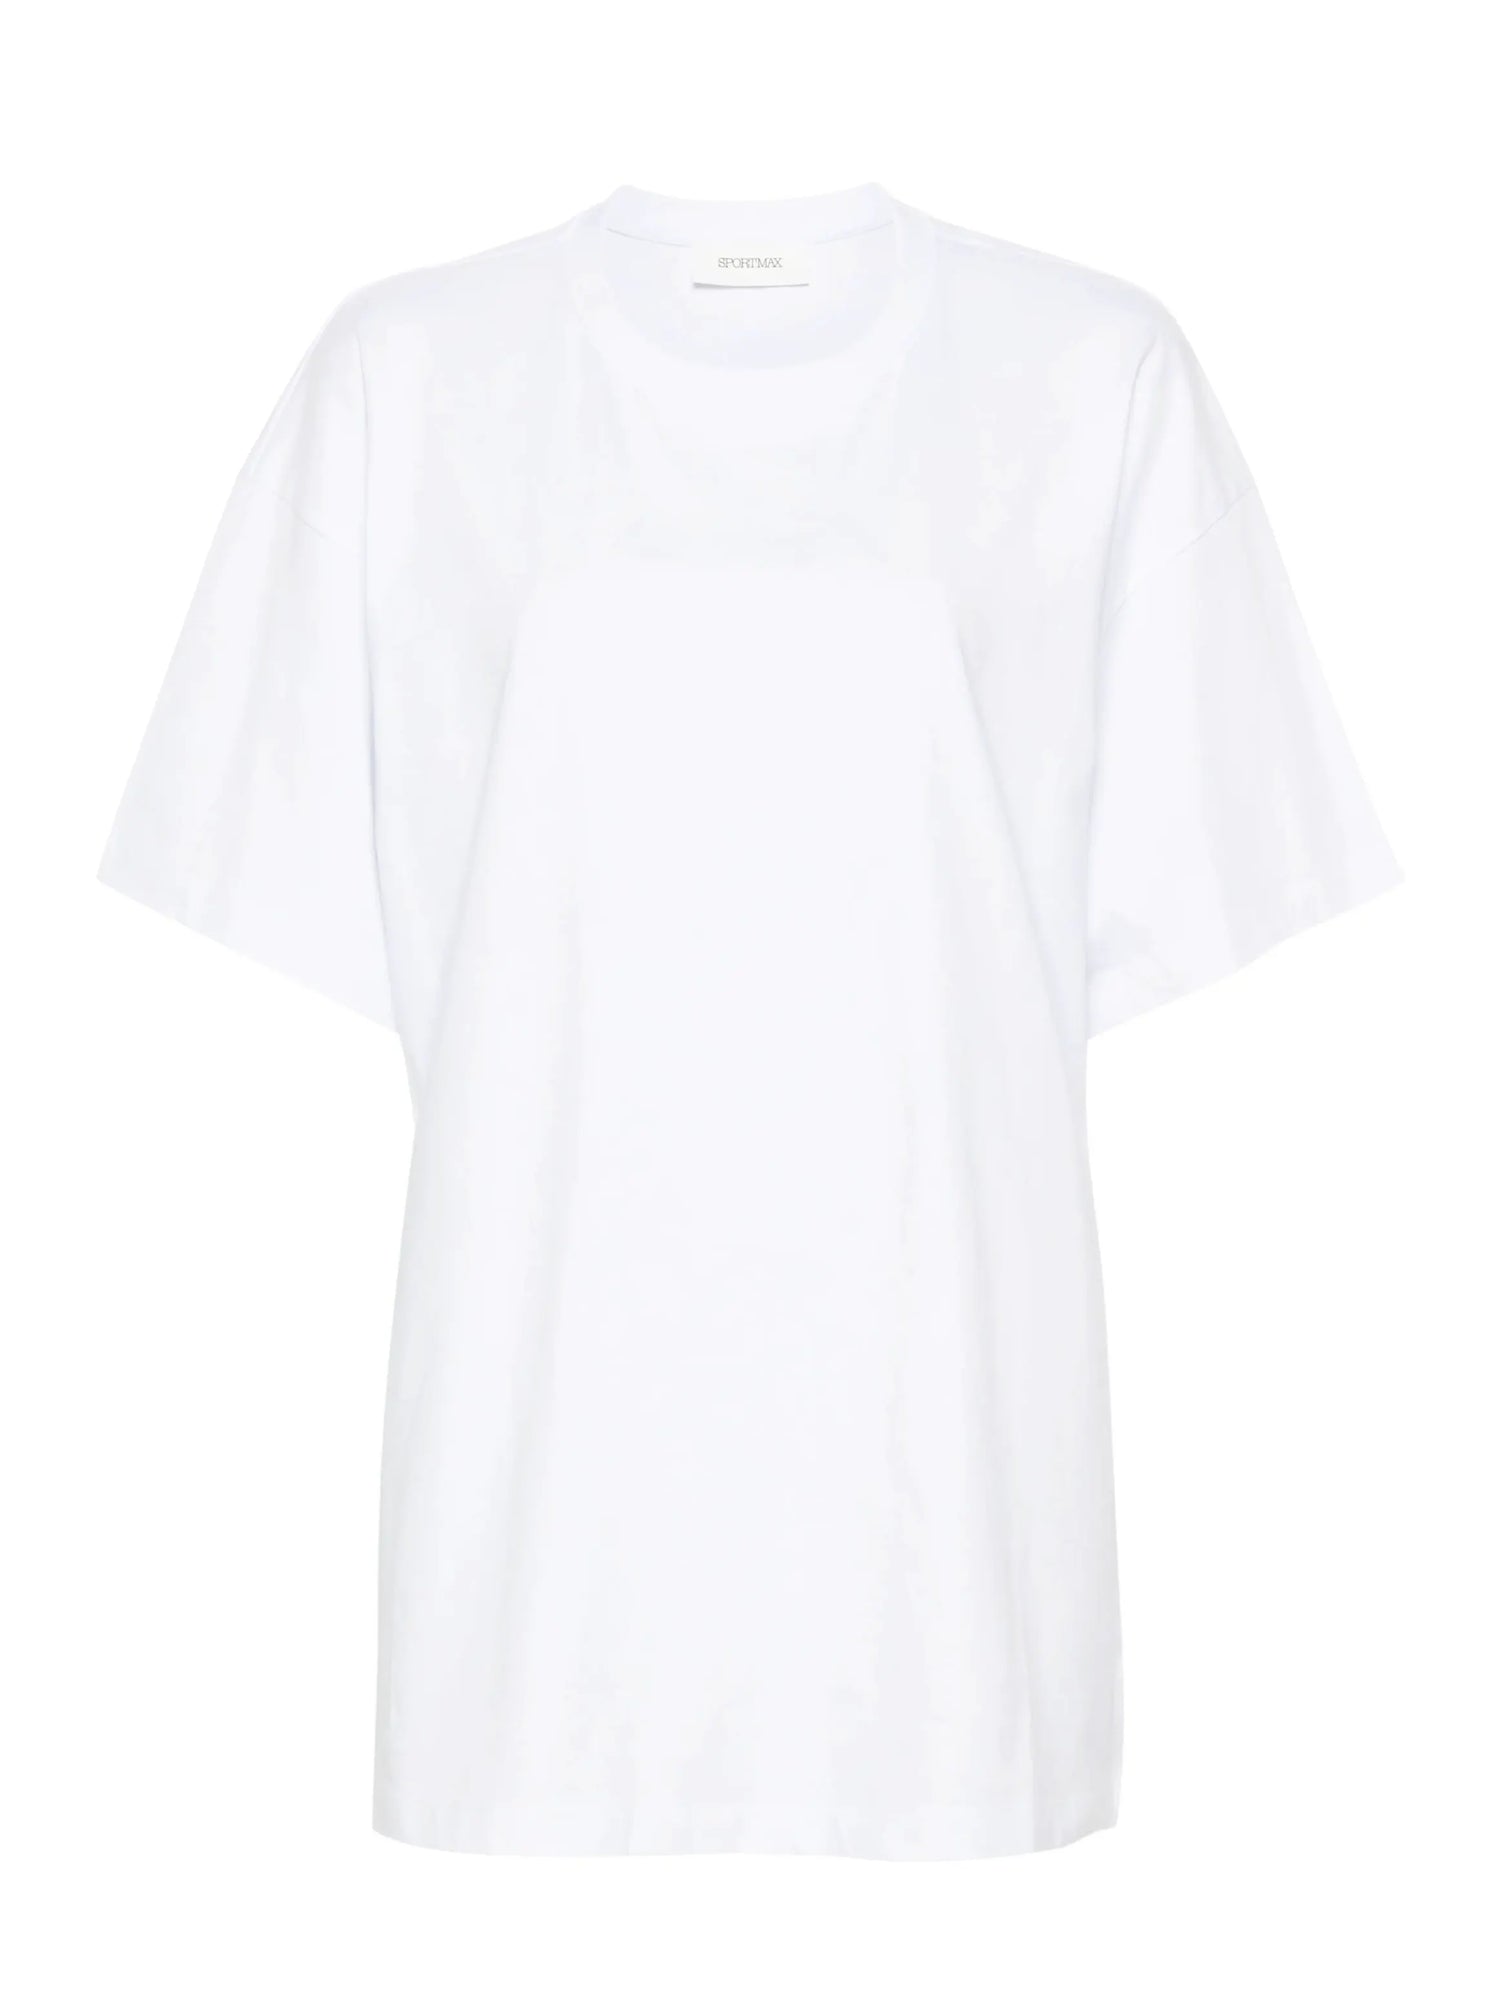 BLOCCO oversize t-shirt, white